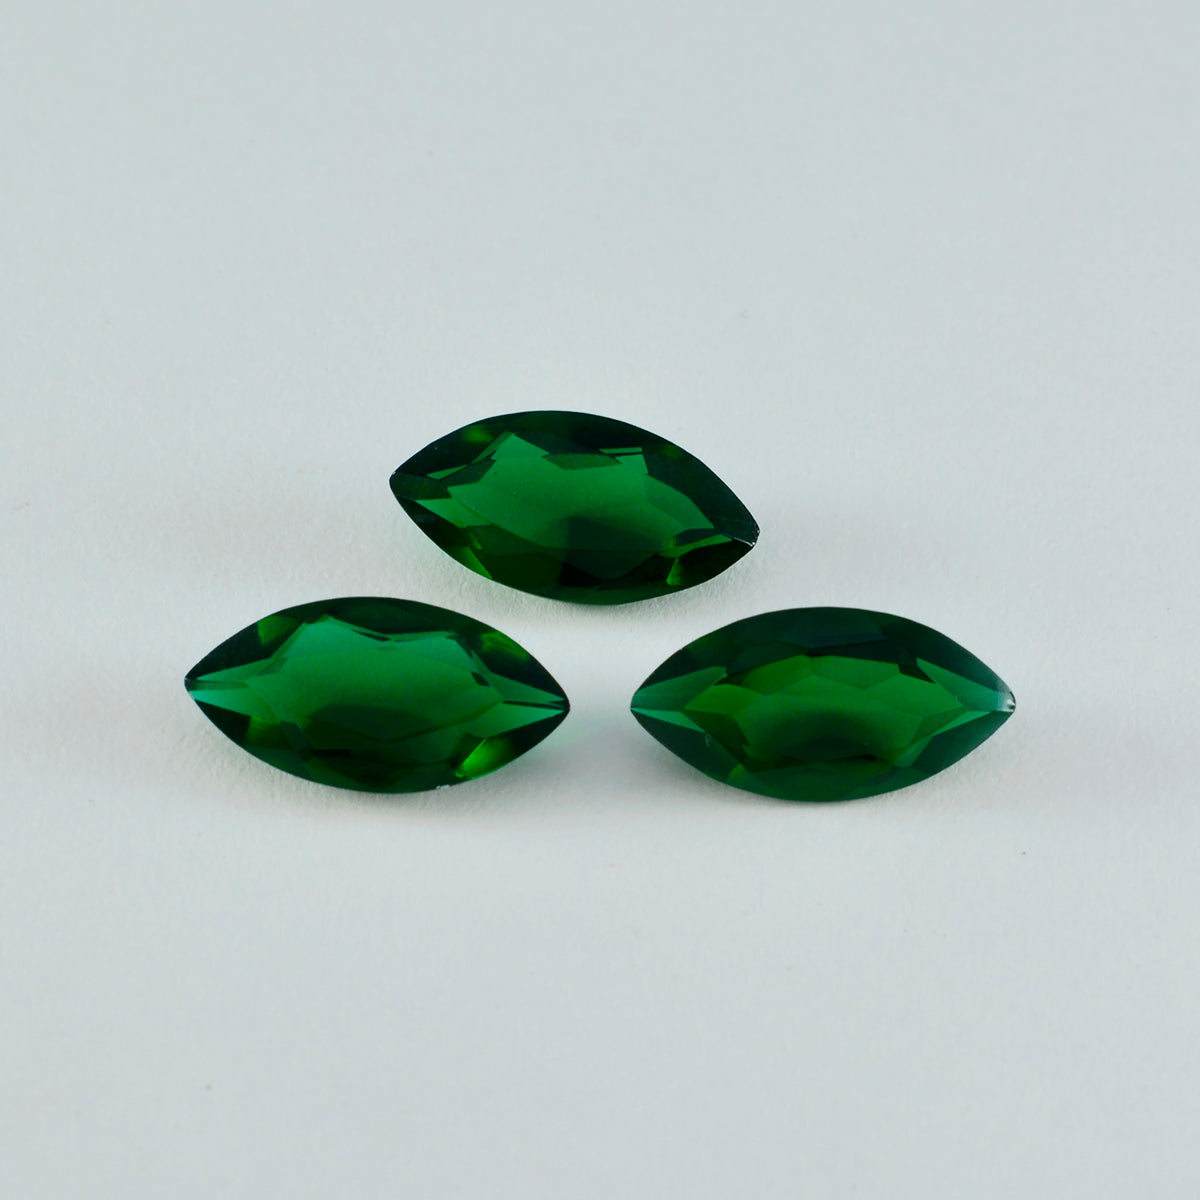 riyogems 1 st grön smaragd cz fasetterad 9x18 mm markis form a1 kvalitetssten